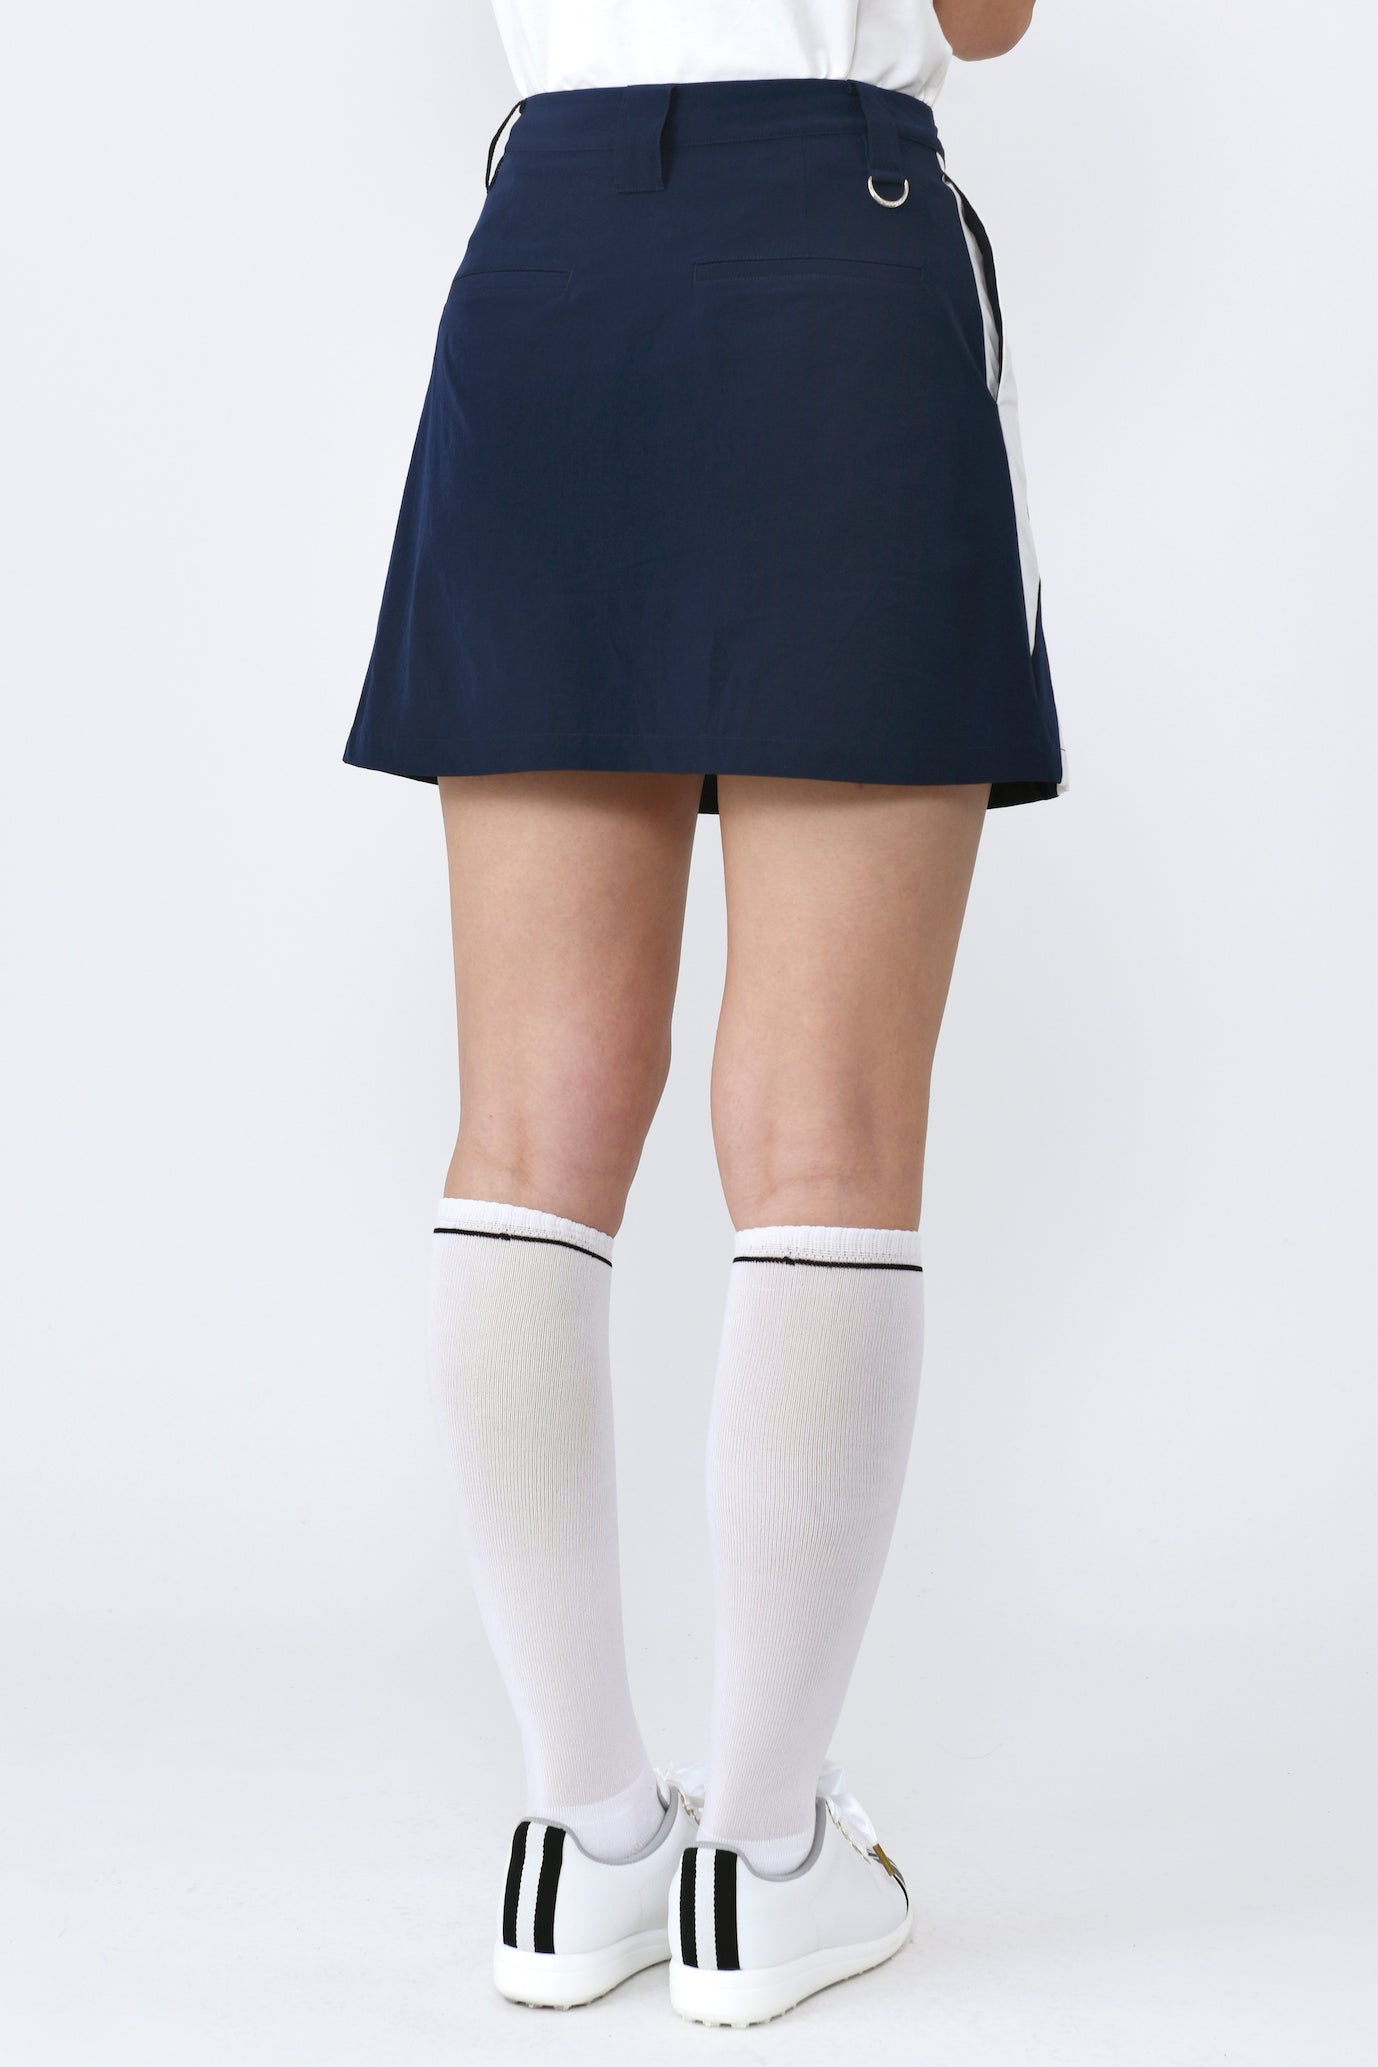 High tension bias line asymmetric skirt (801J1554)